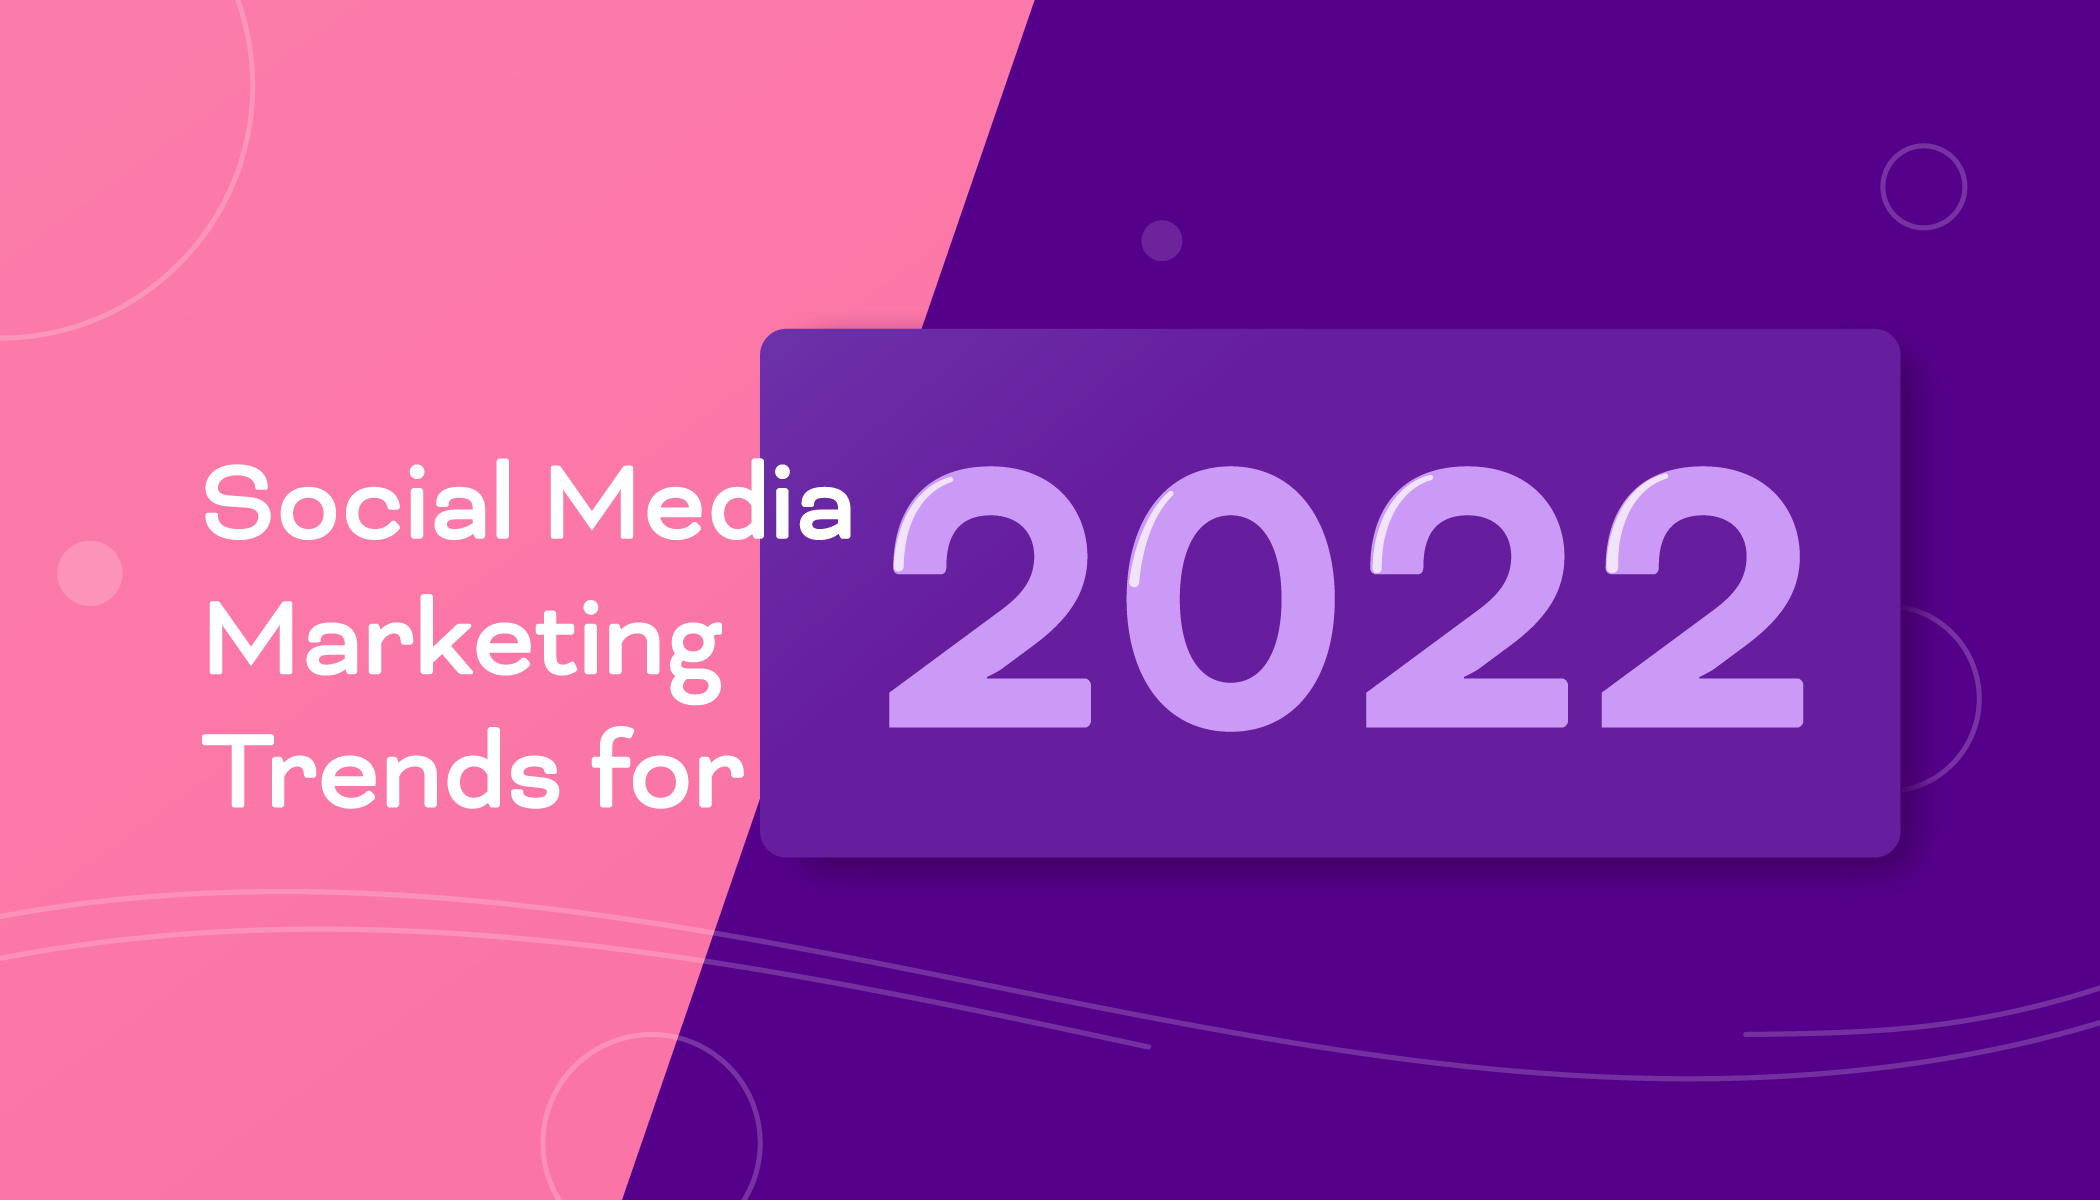 digital marketing trends 2022 infographic